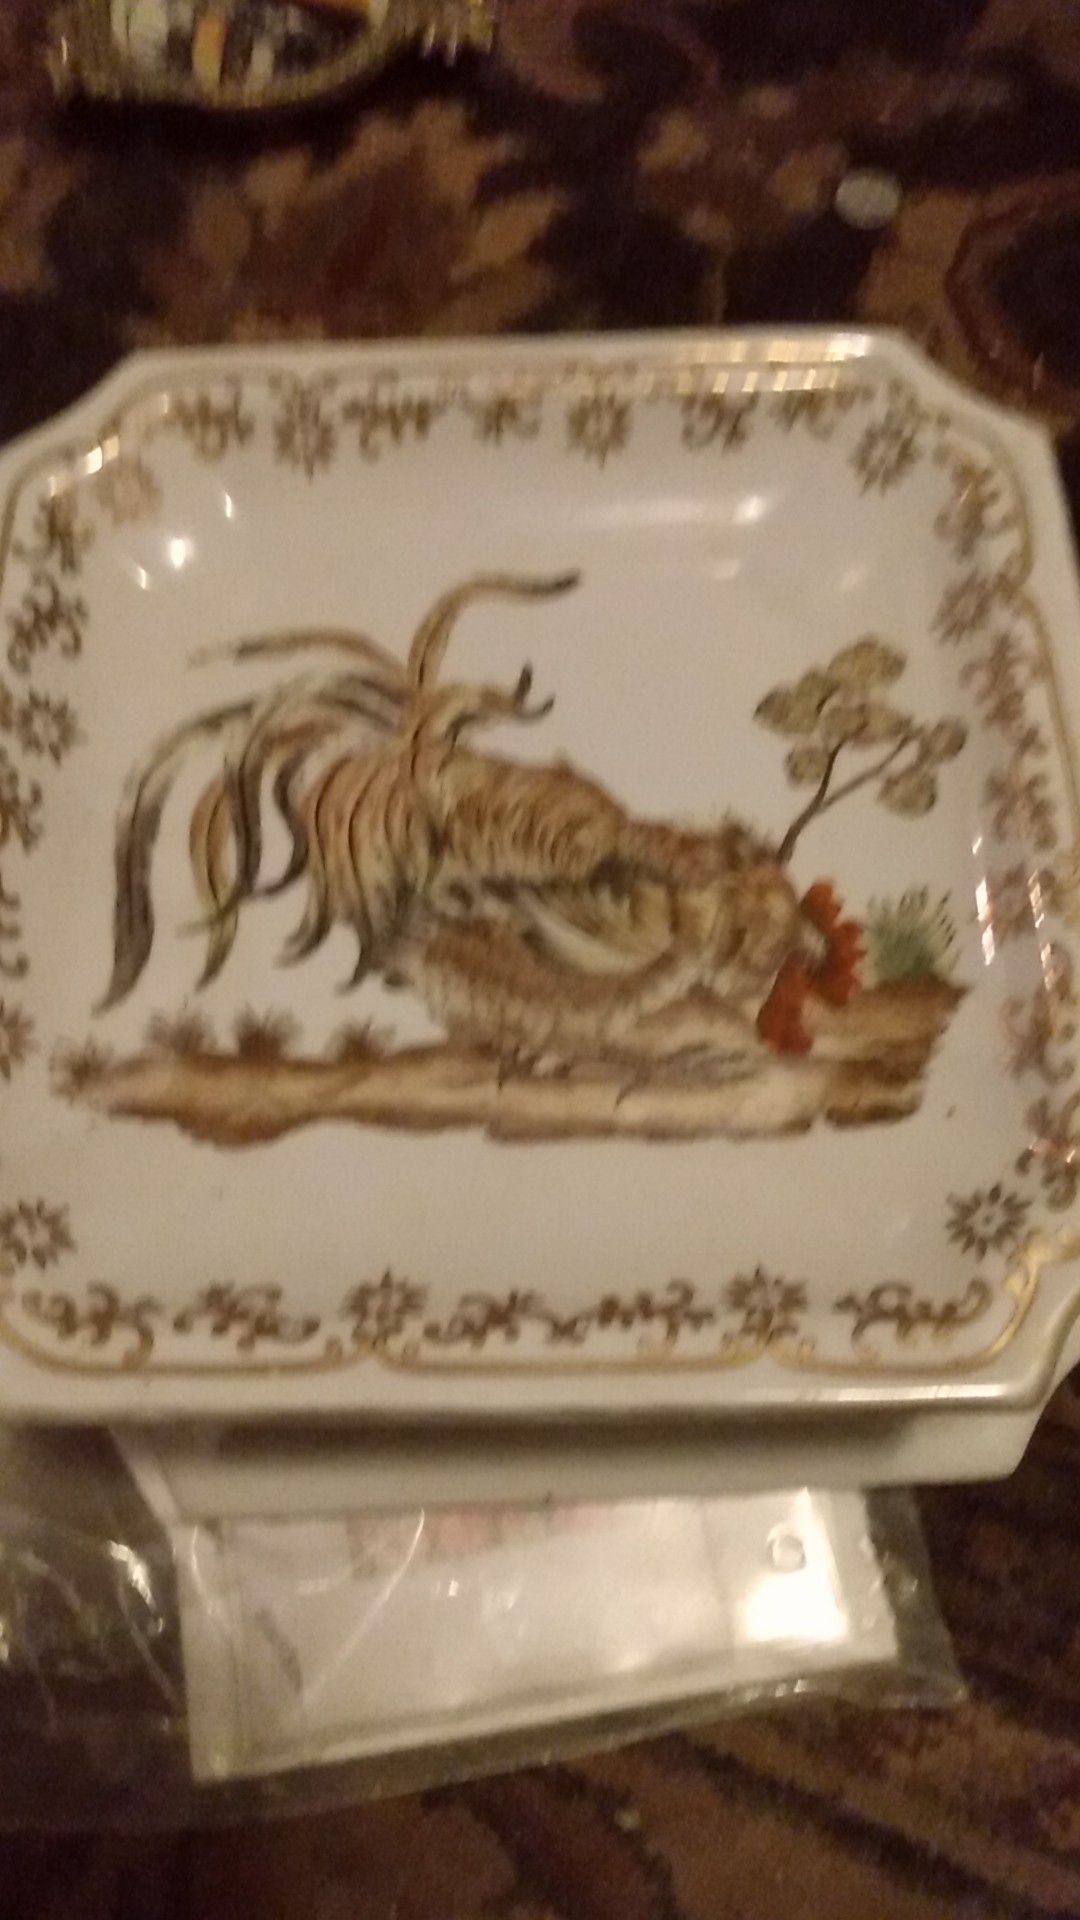 Vintage Rooster plates